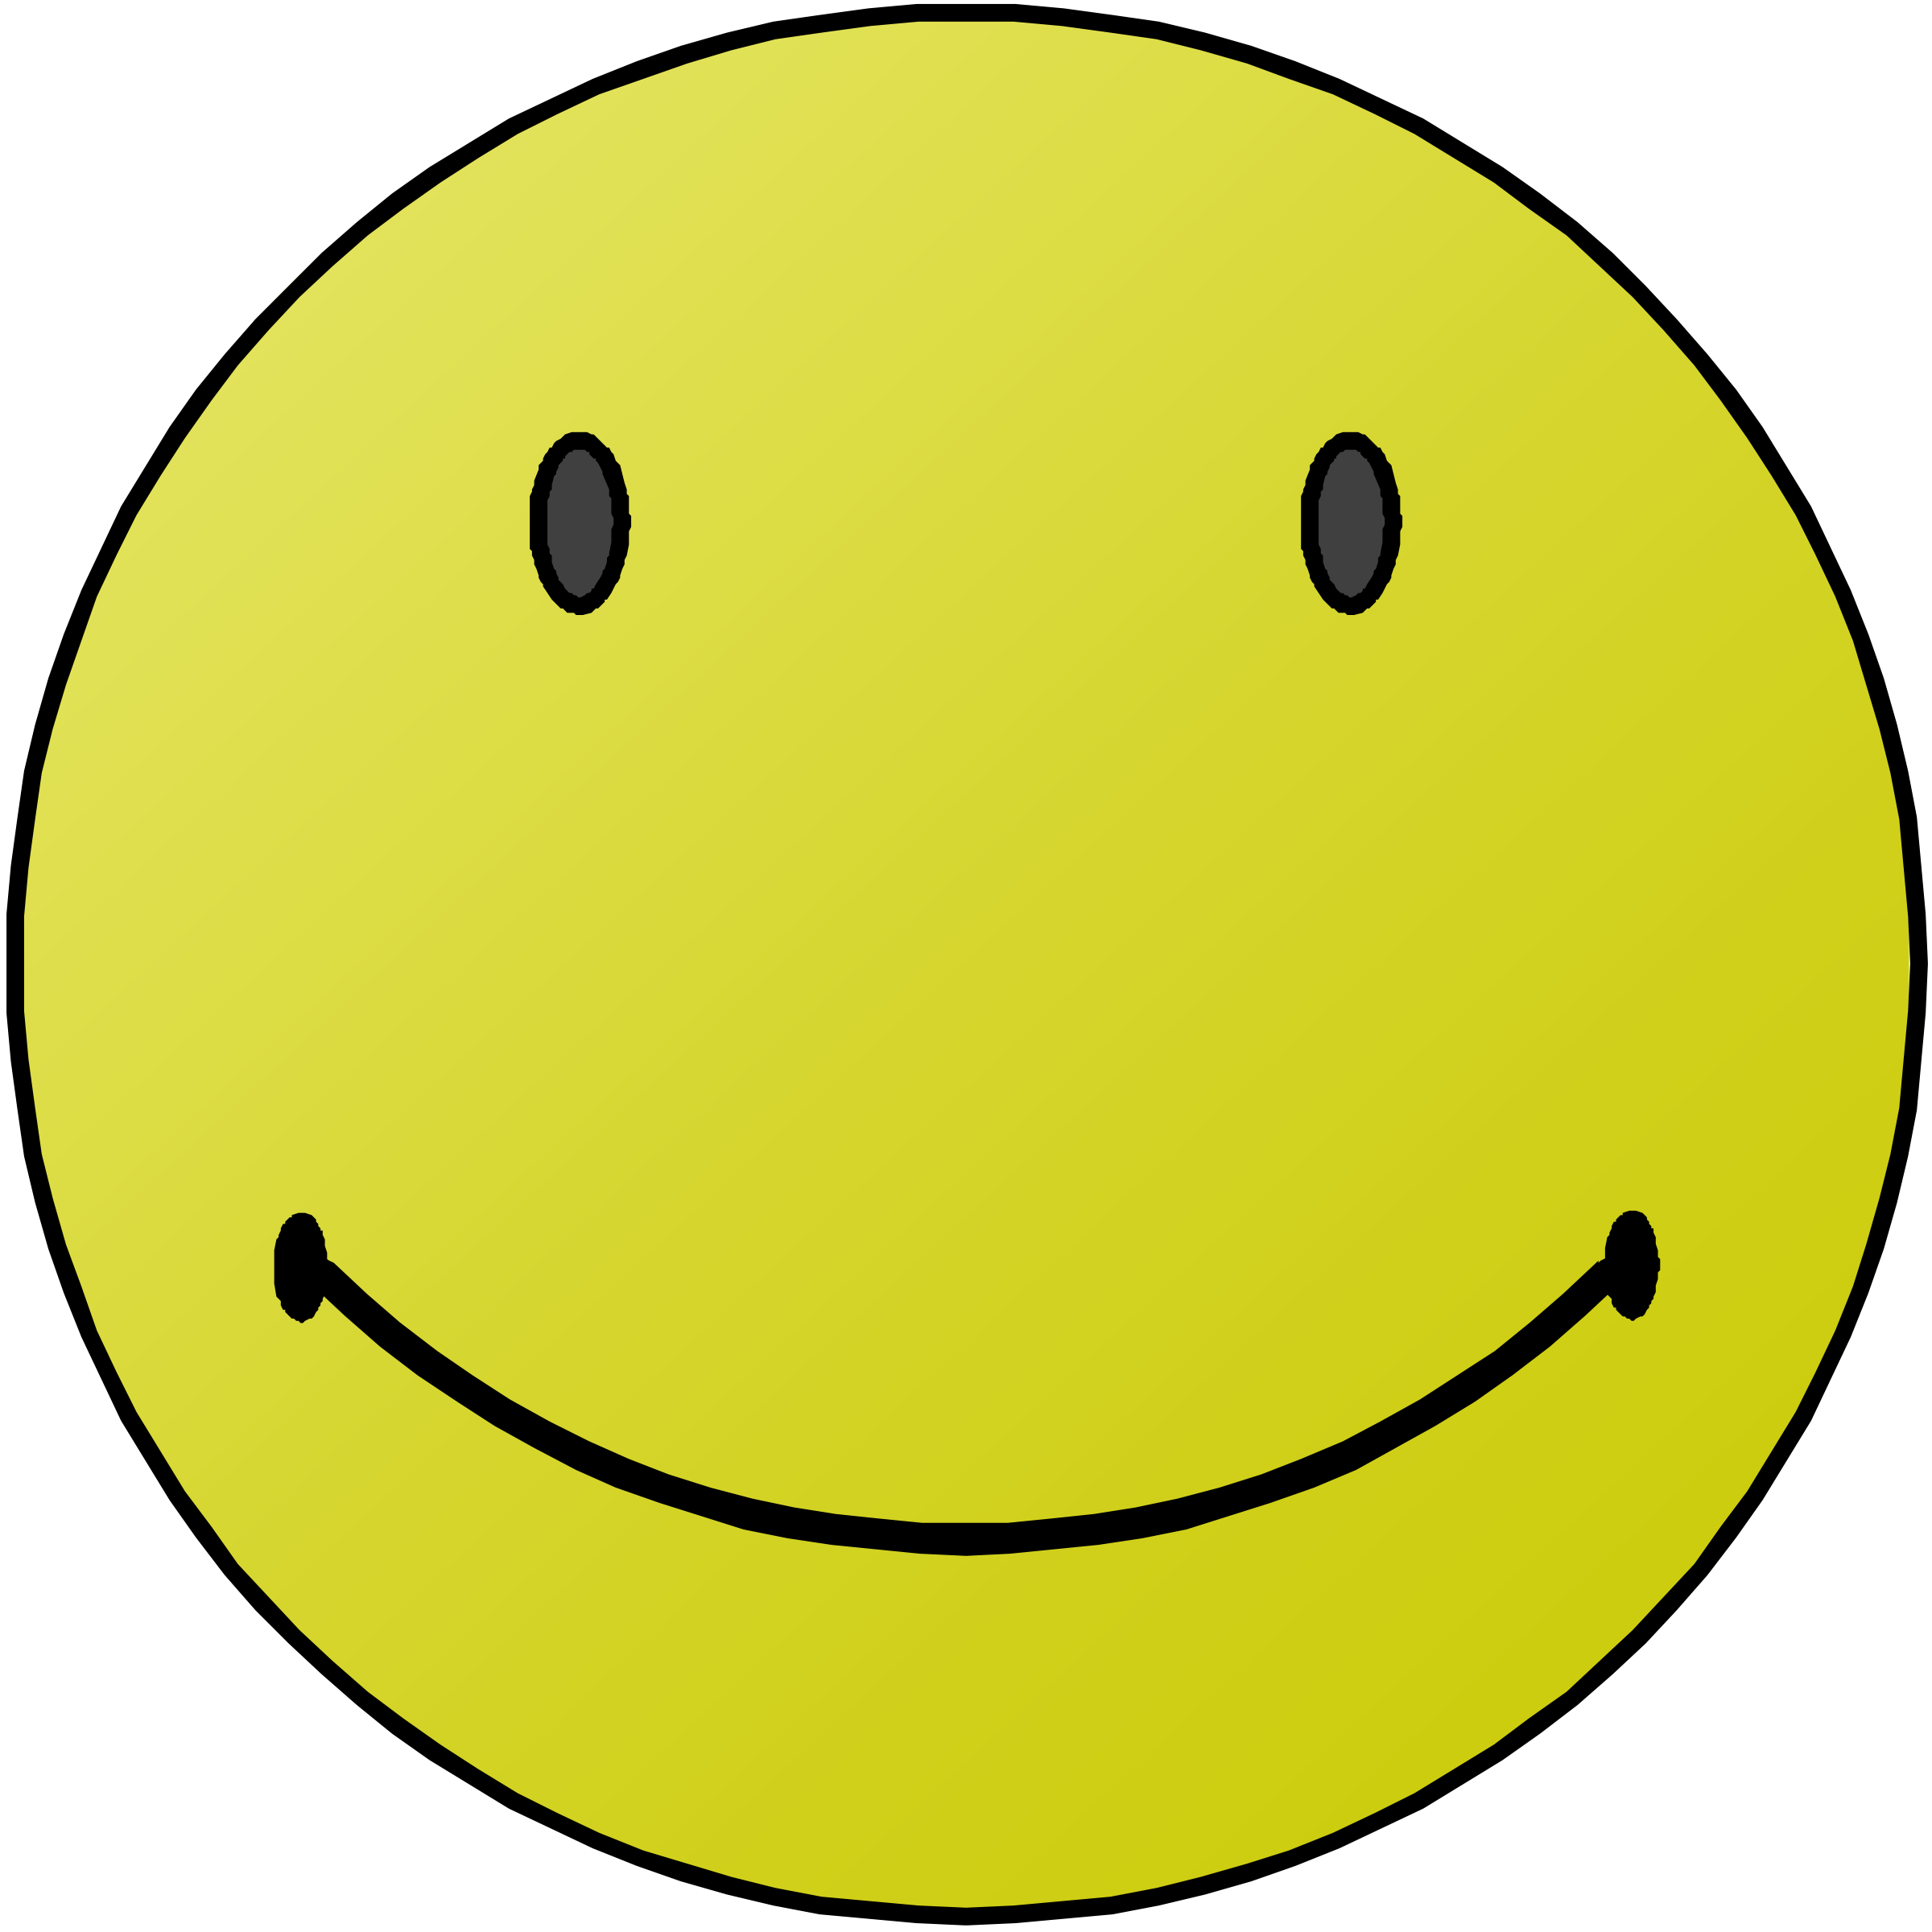 Happy Sad Smiley Face Clip Art - ClipArt Best